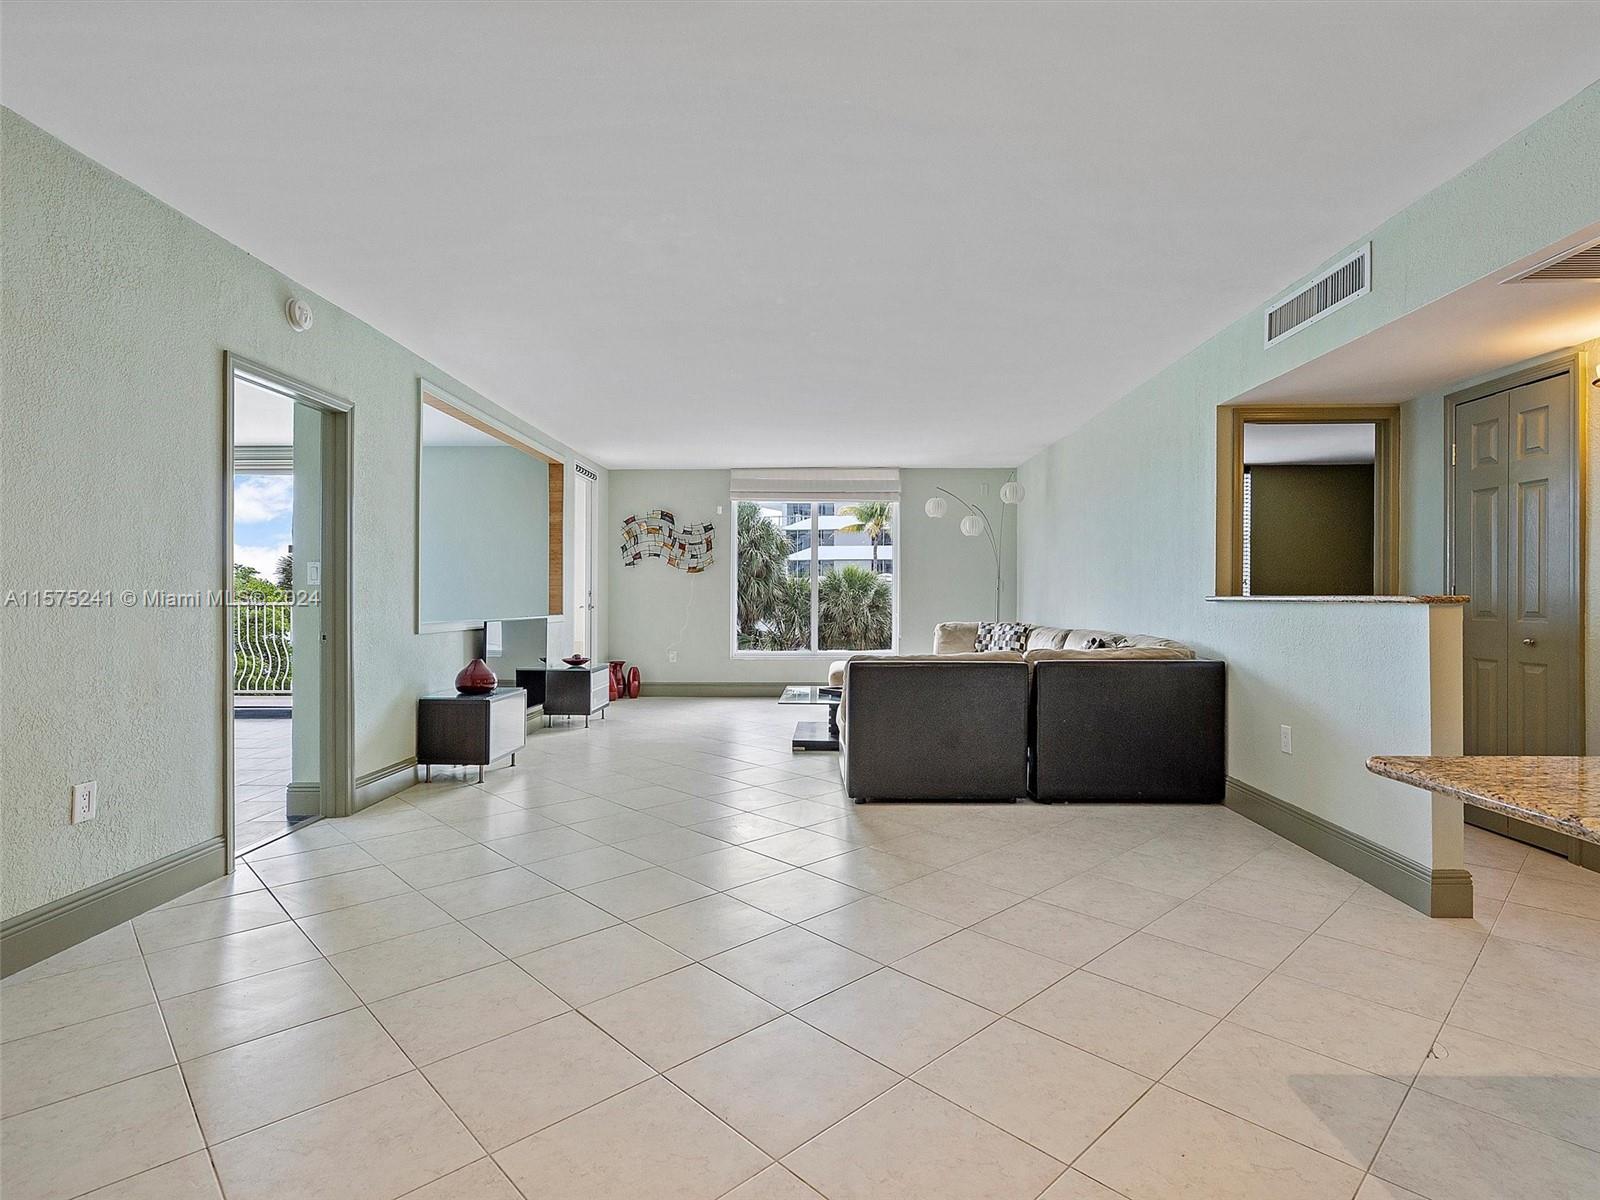 Property for Sale at 10350 W Bay Harbor Dr 2D, Bay Harbor Islands, Miami-Dade County, Florida - Bedrooms: 2 
Bathrooms: 2  - $589,000